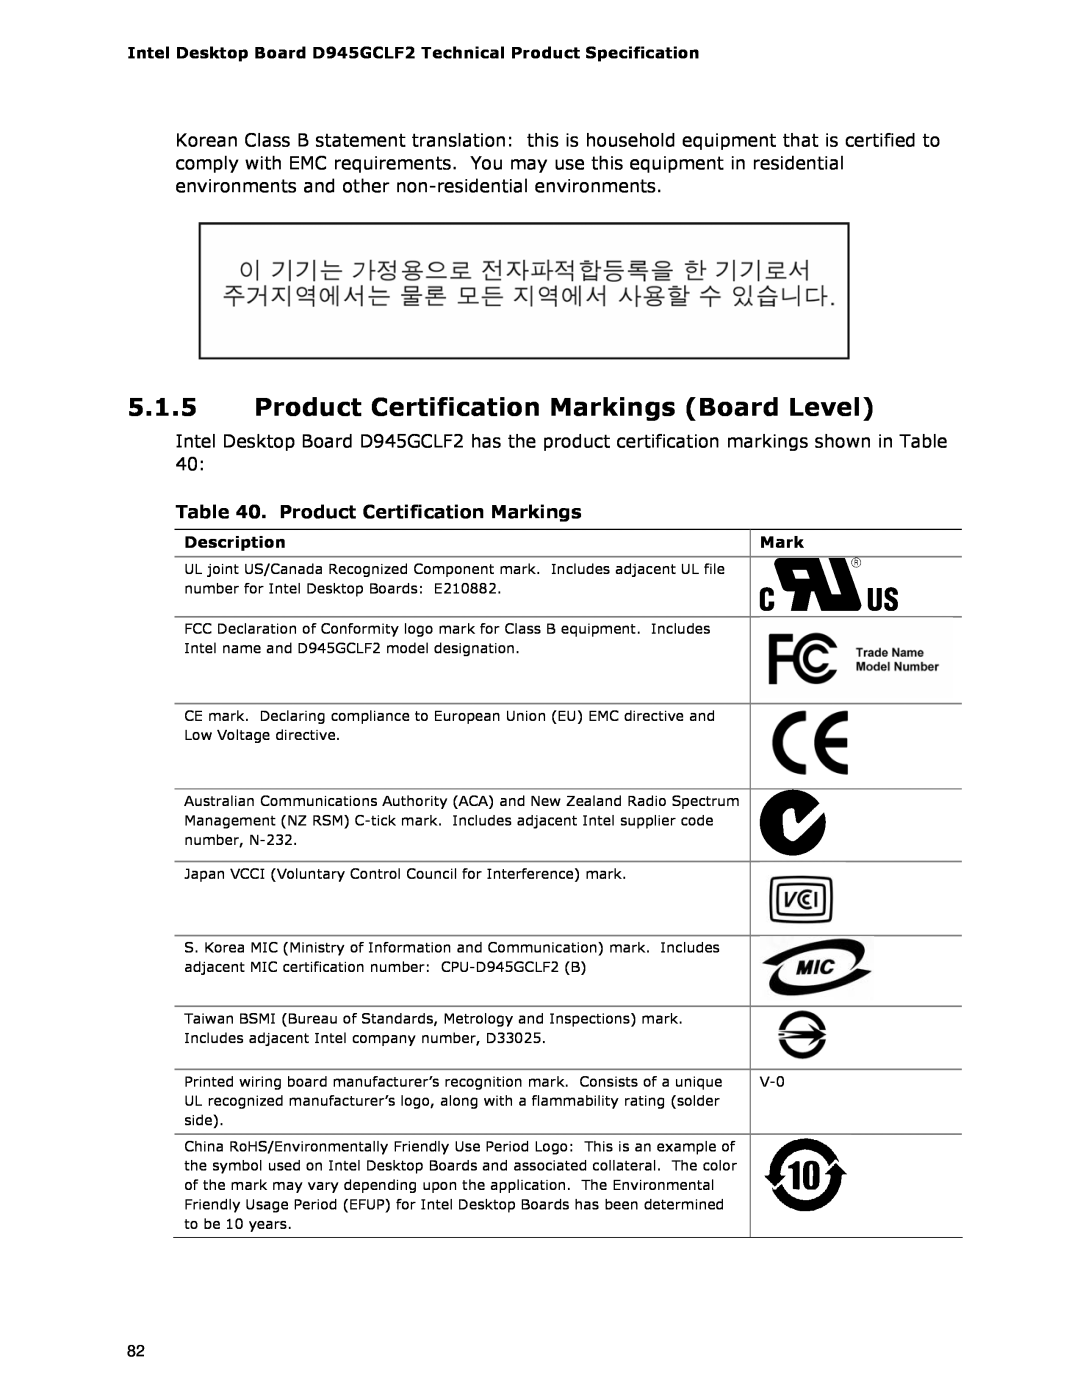 Intel D945GCLF2 specifications Product Certification Markings Board Level 